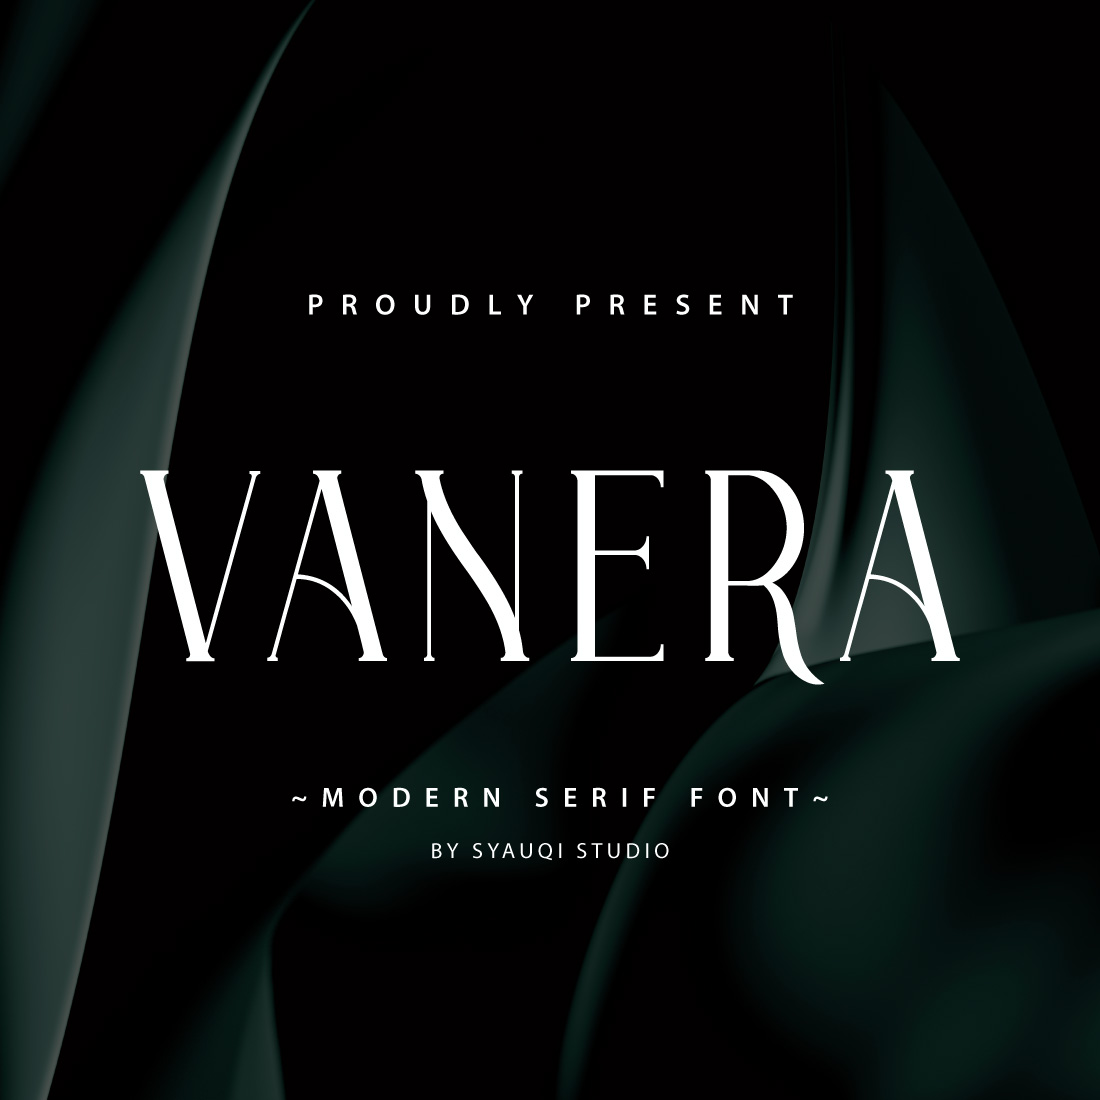 Vanera - Modern Serif Font cover image.